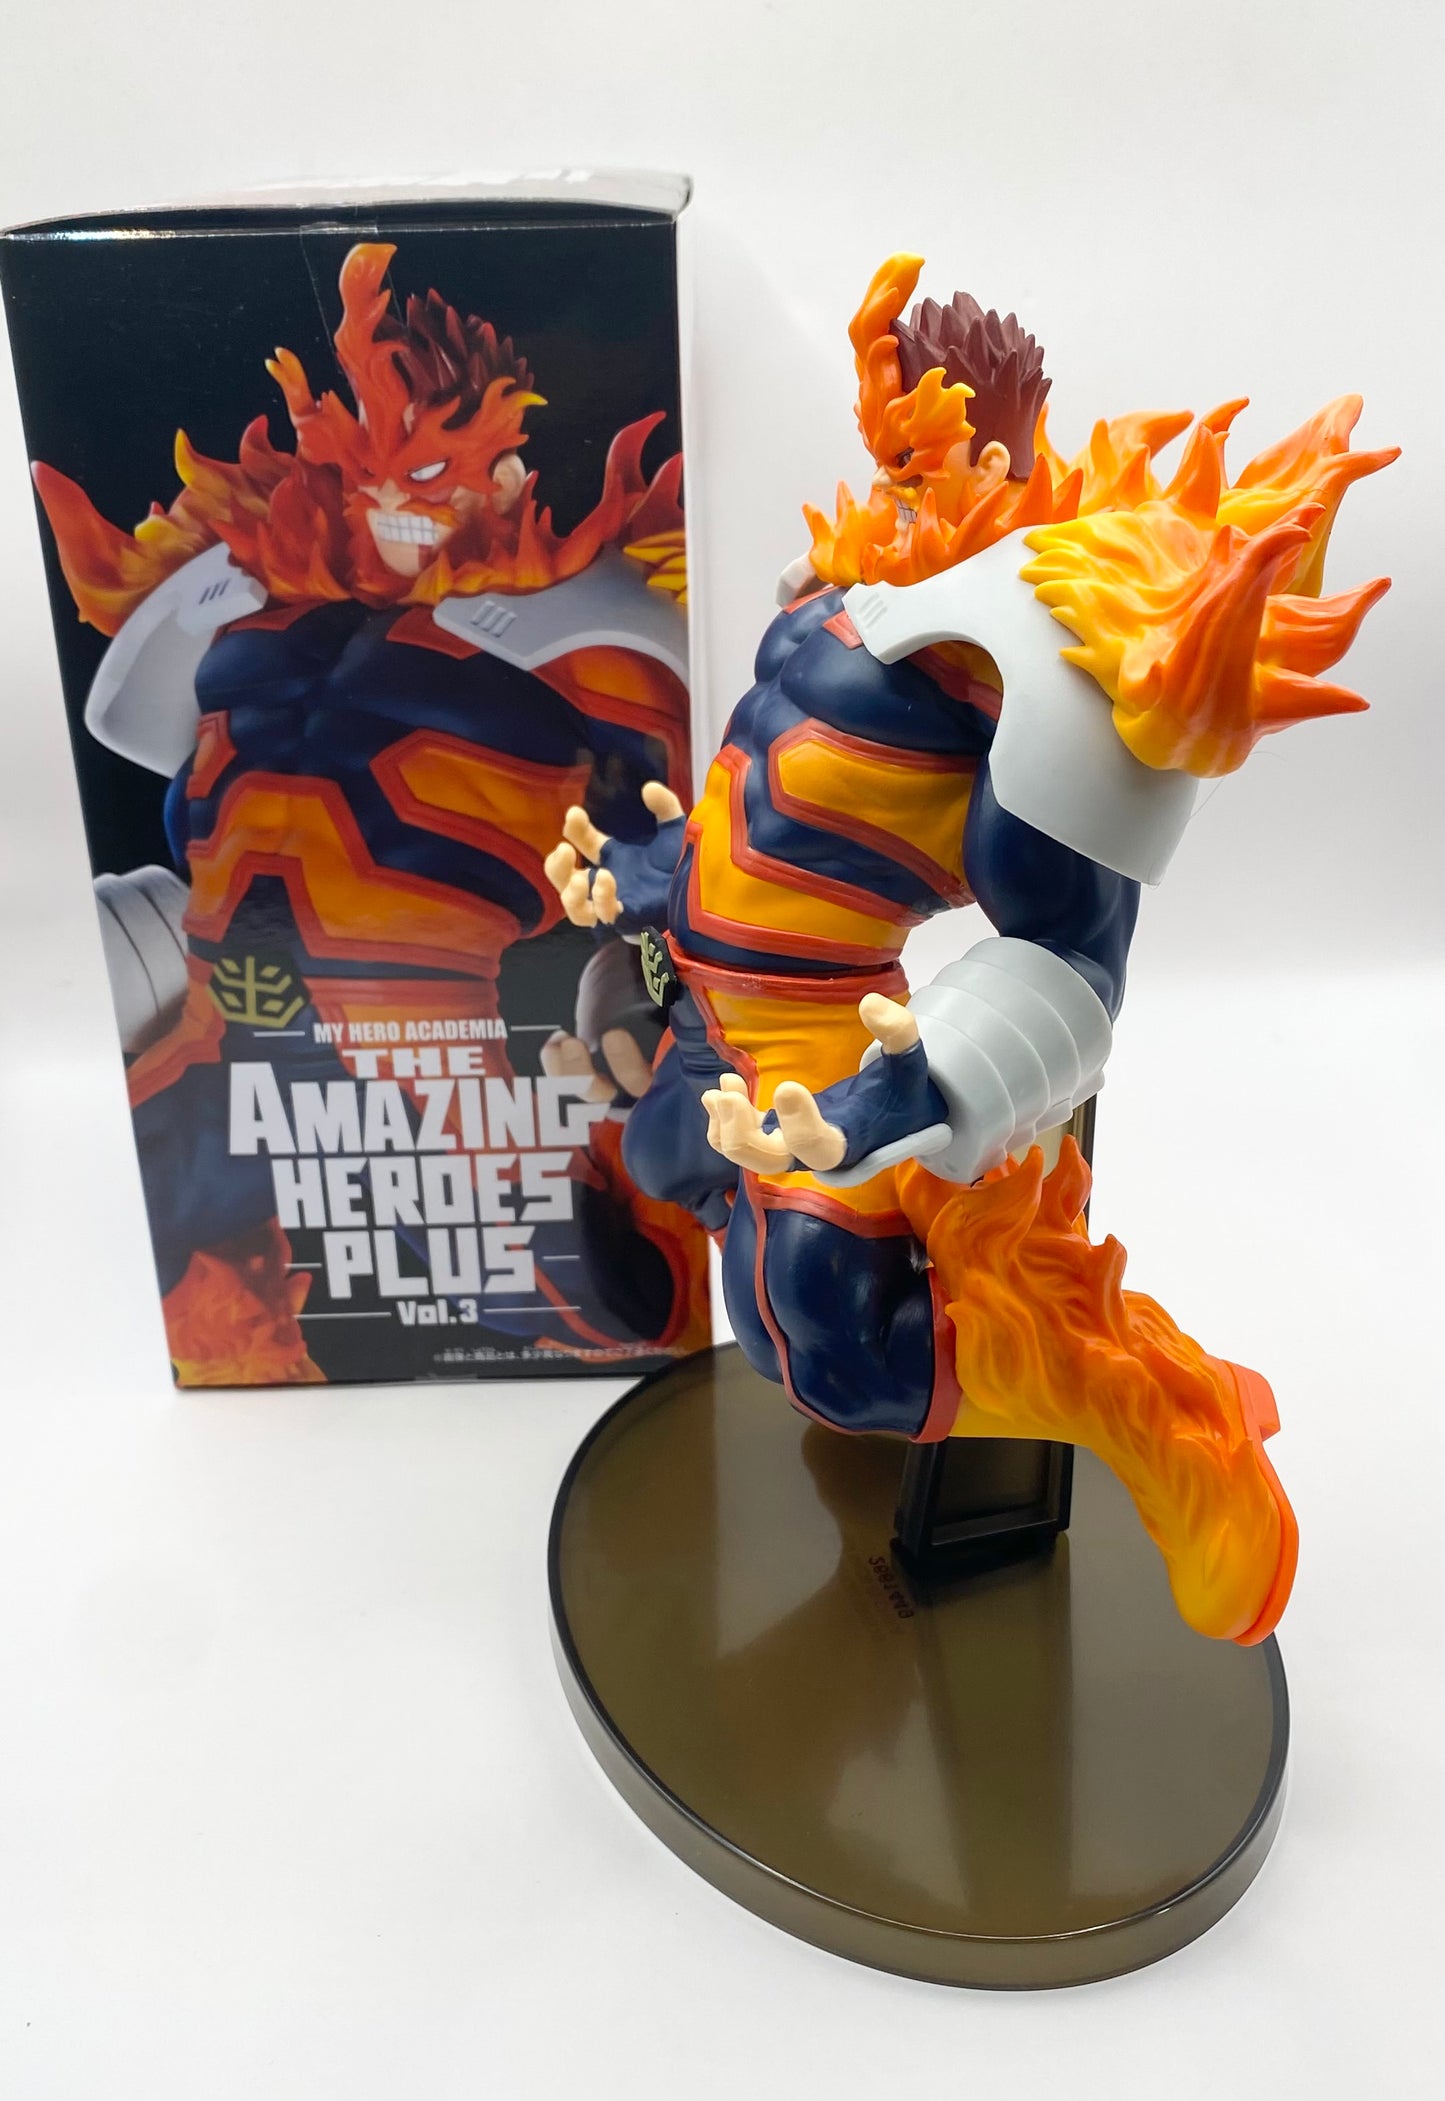 My Hero Academia Endeavor The Amazing Heroes Plus Vol. 3 Statue by Bandai